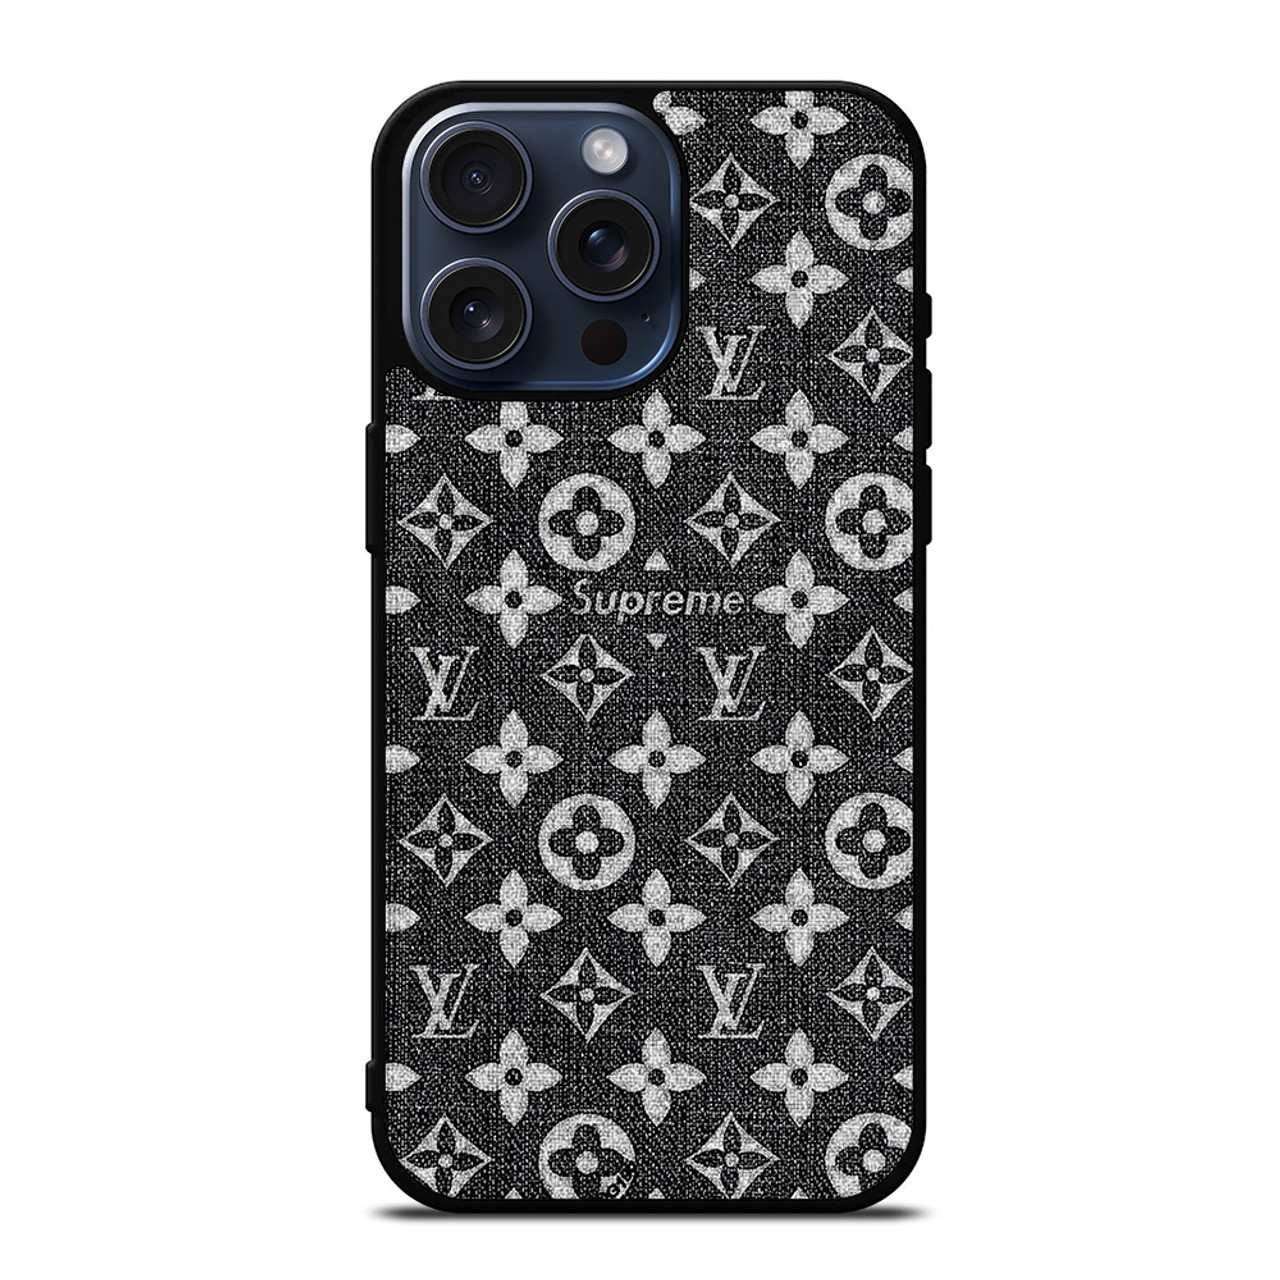 LOUIS VUITTON LV LOGO GRAY iPhone 15 Pro Max Case Cover